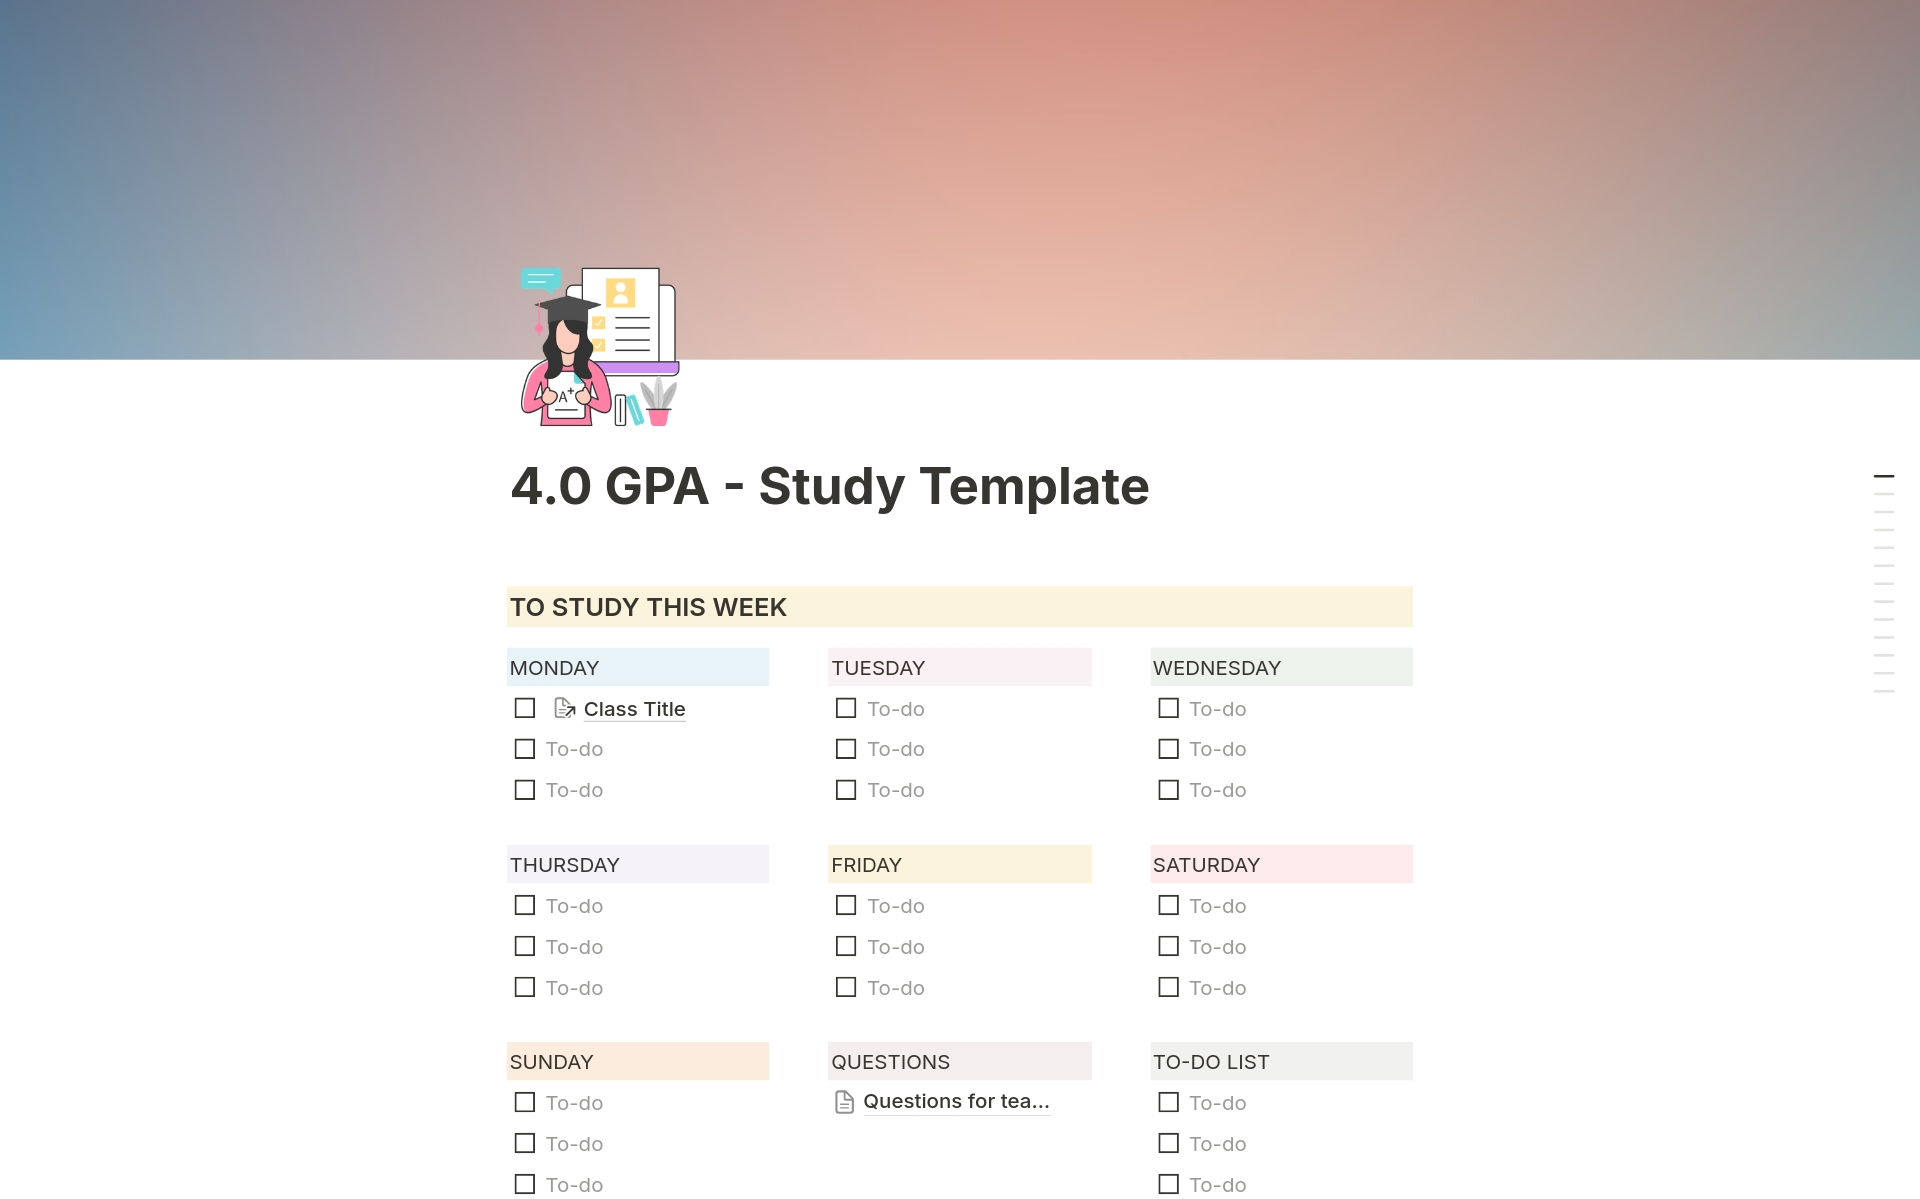 Vista previa de una plantilla para 4.0 GPA - Study System